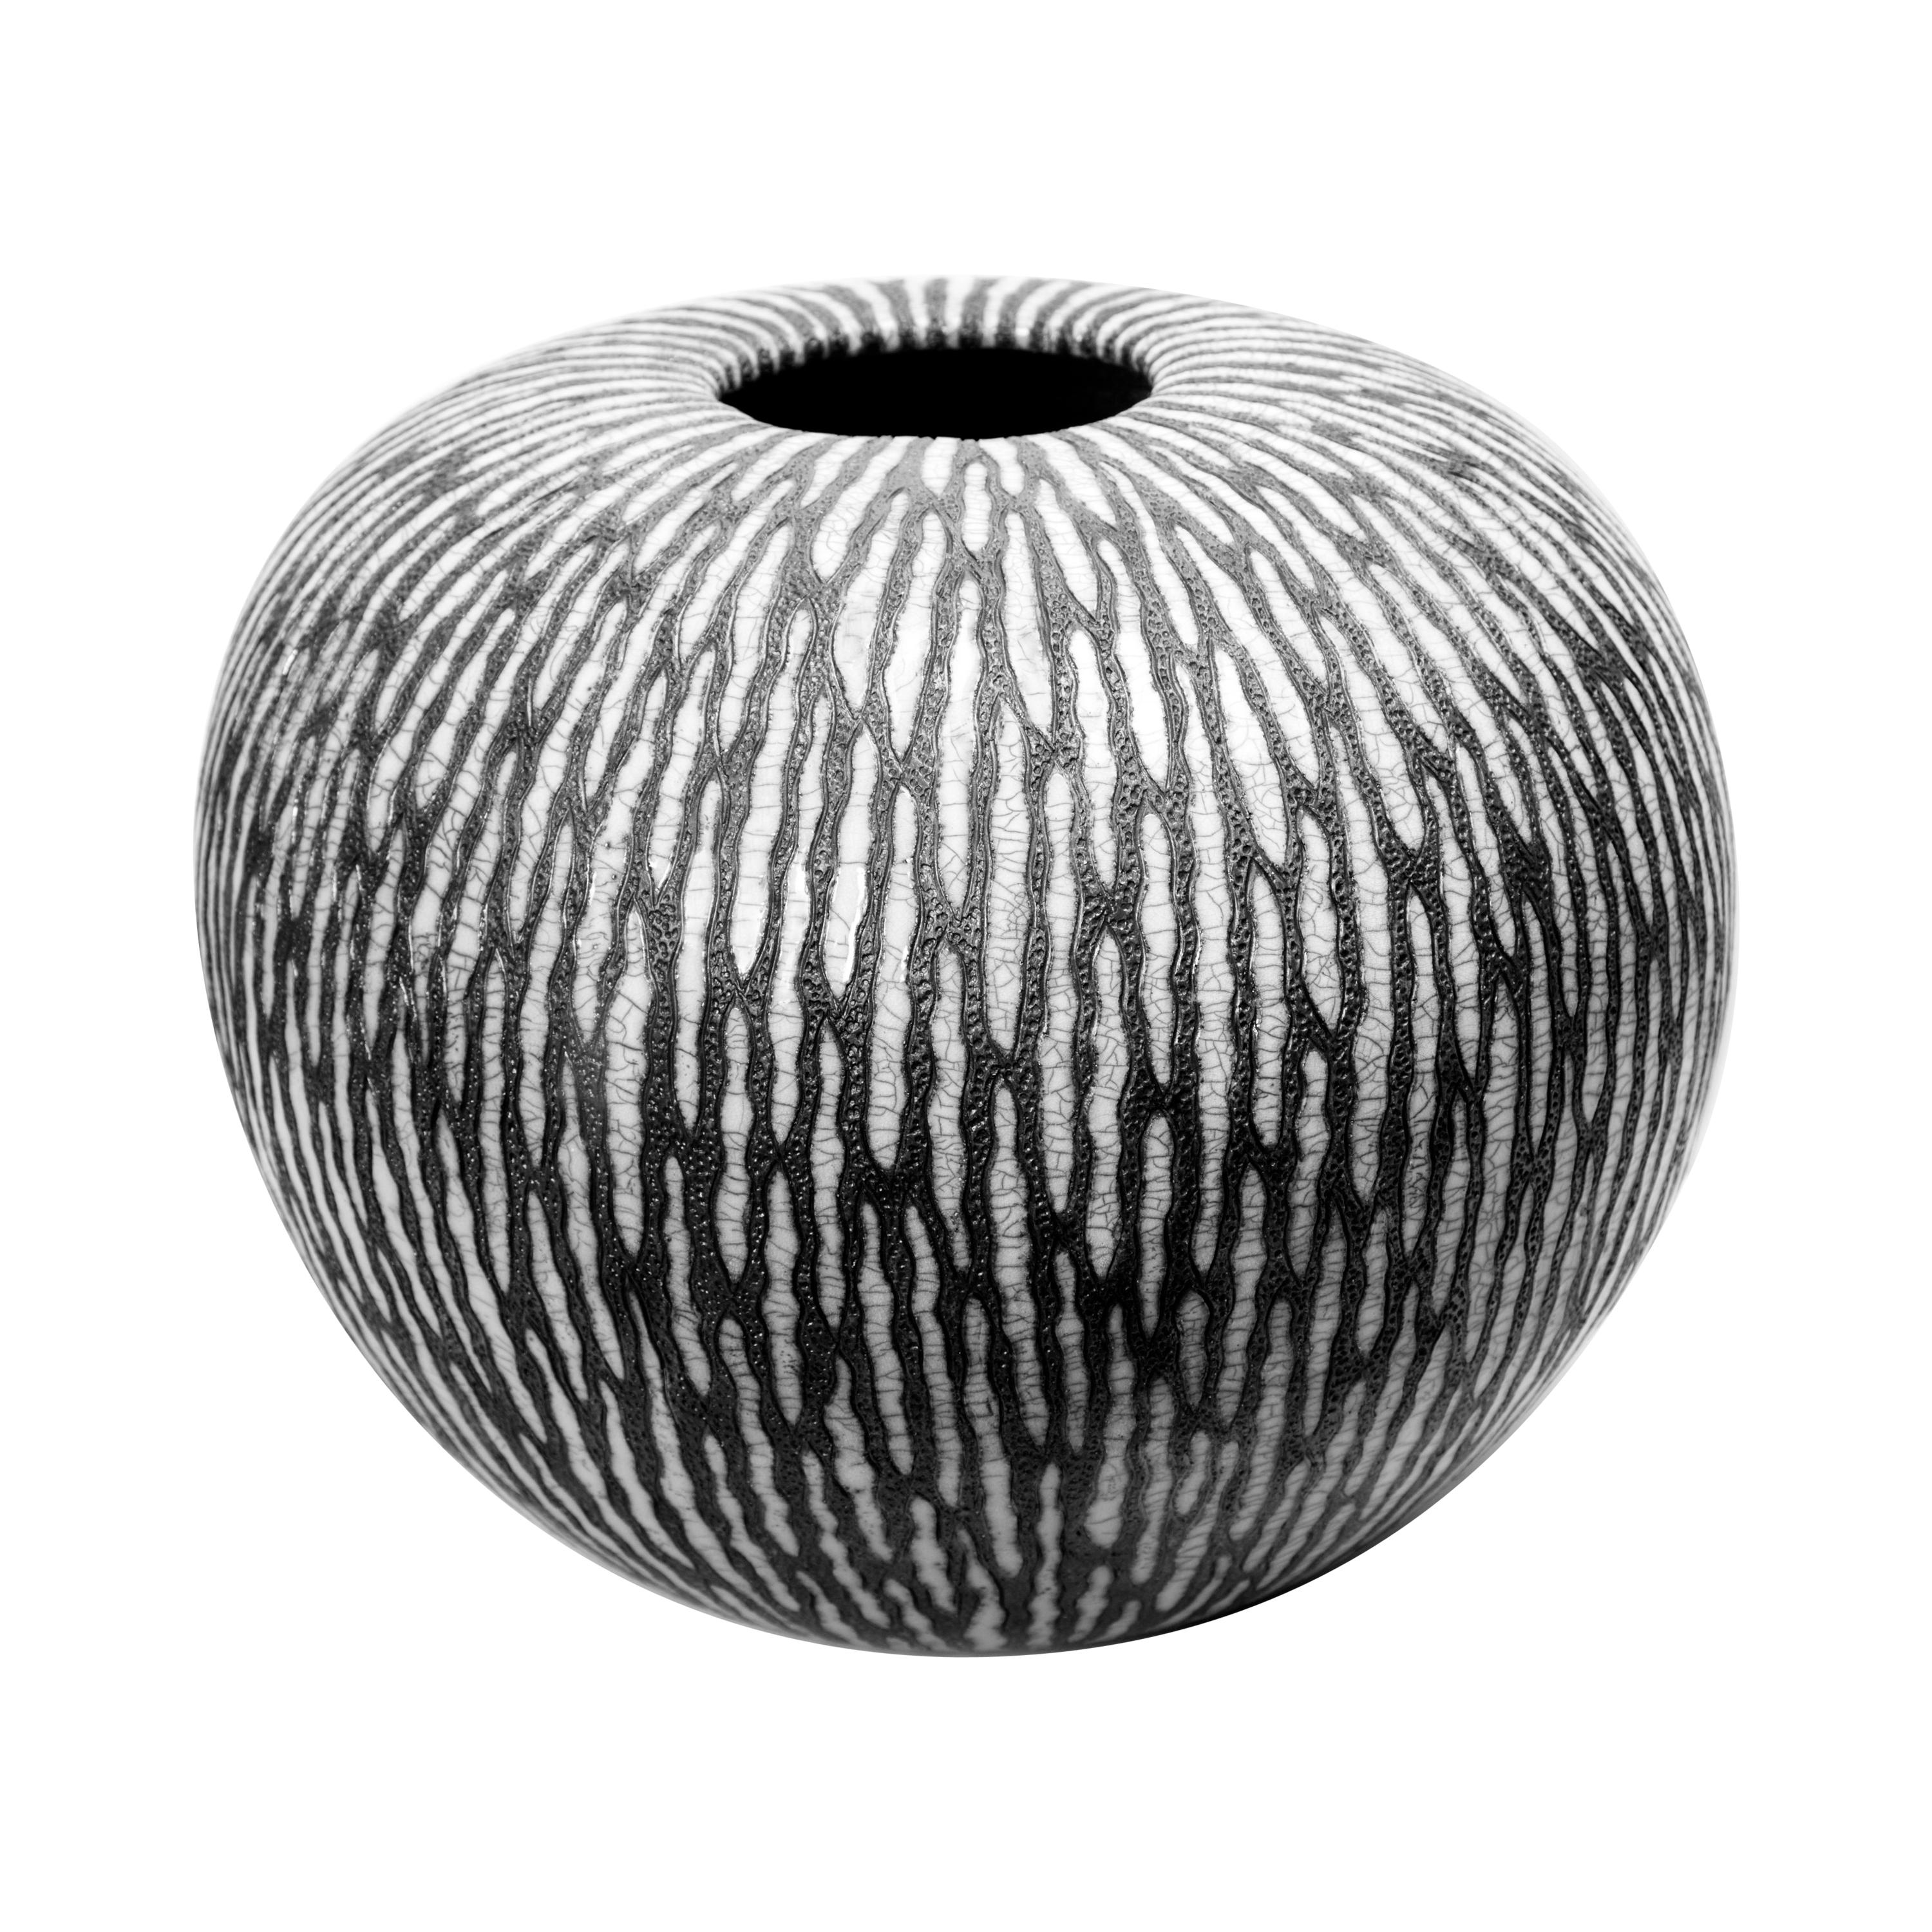 Contemporary Black and White Ceramic Globe Vase, Boule Strate, Medium